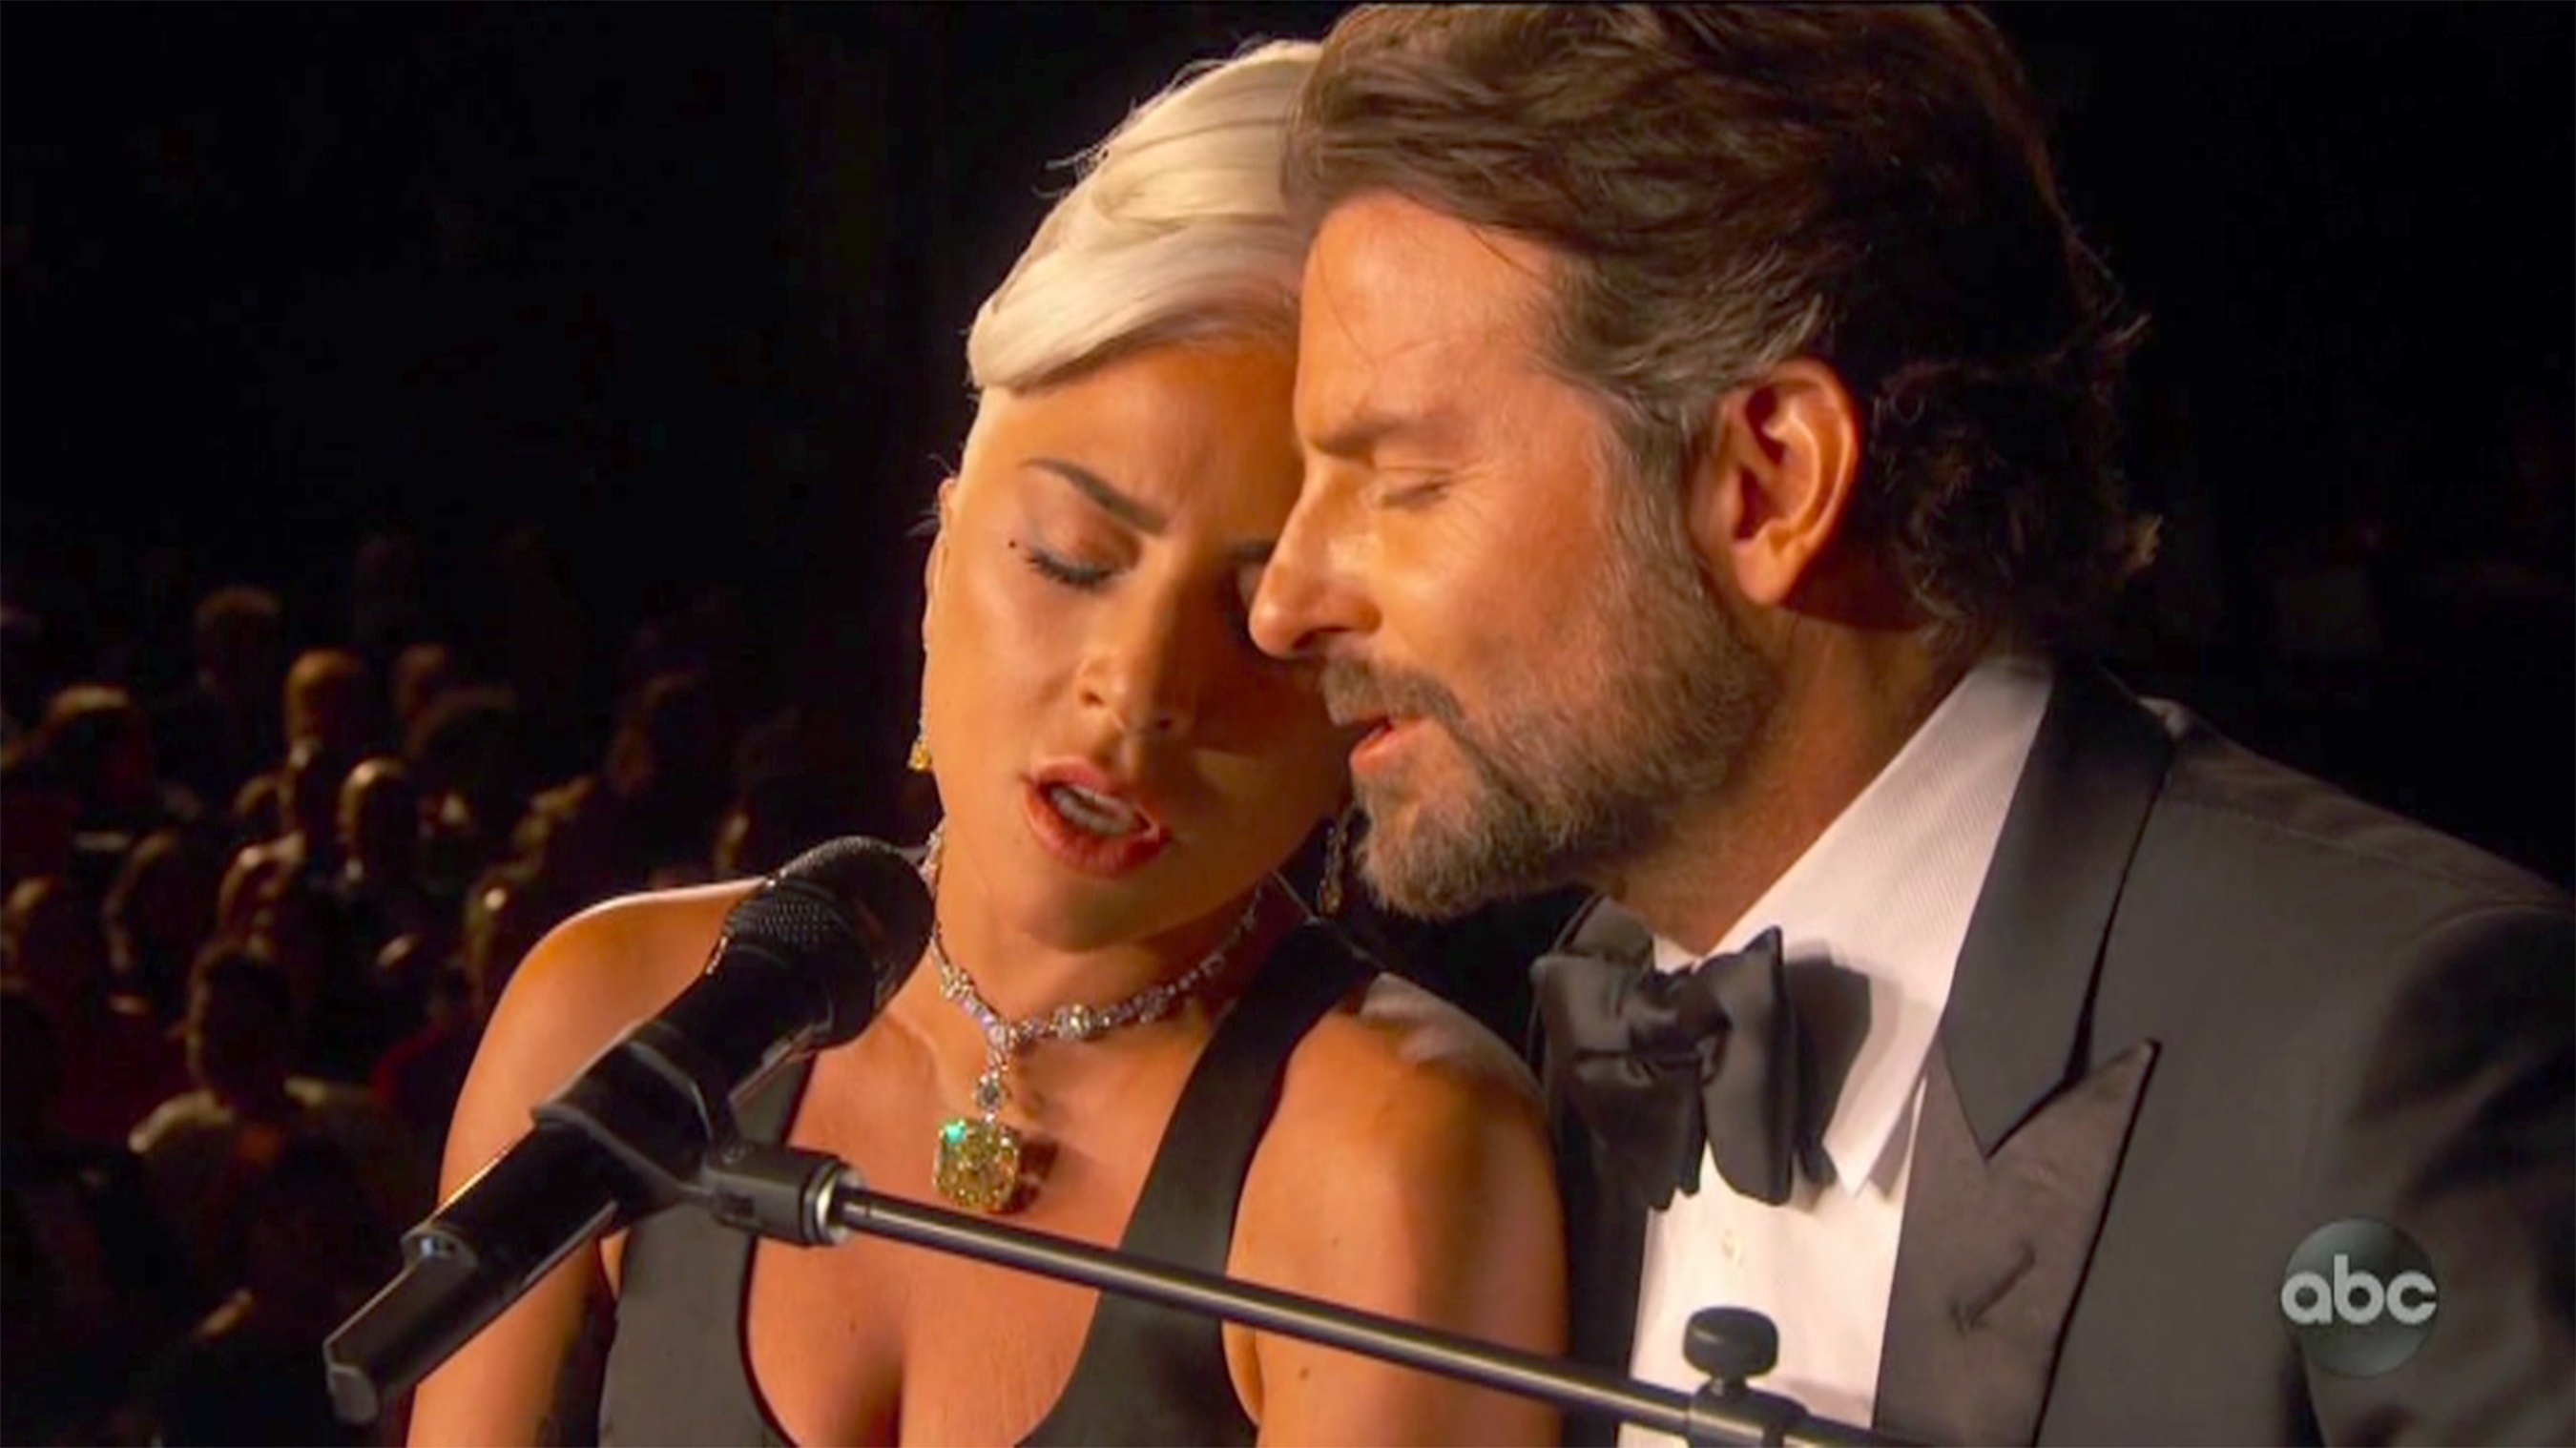 Oscars 2019: Lady Gaga, Bradley Cooper Performance Fan Reactions